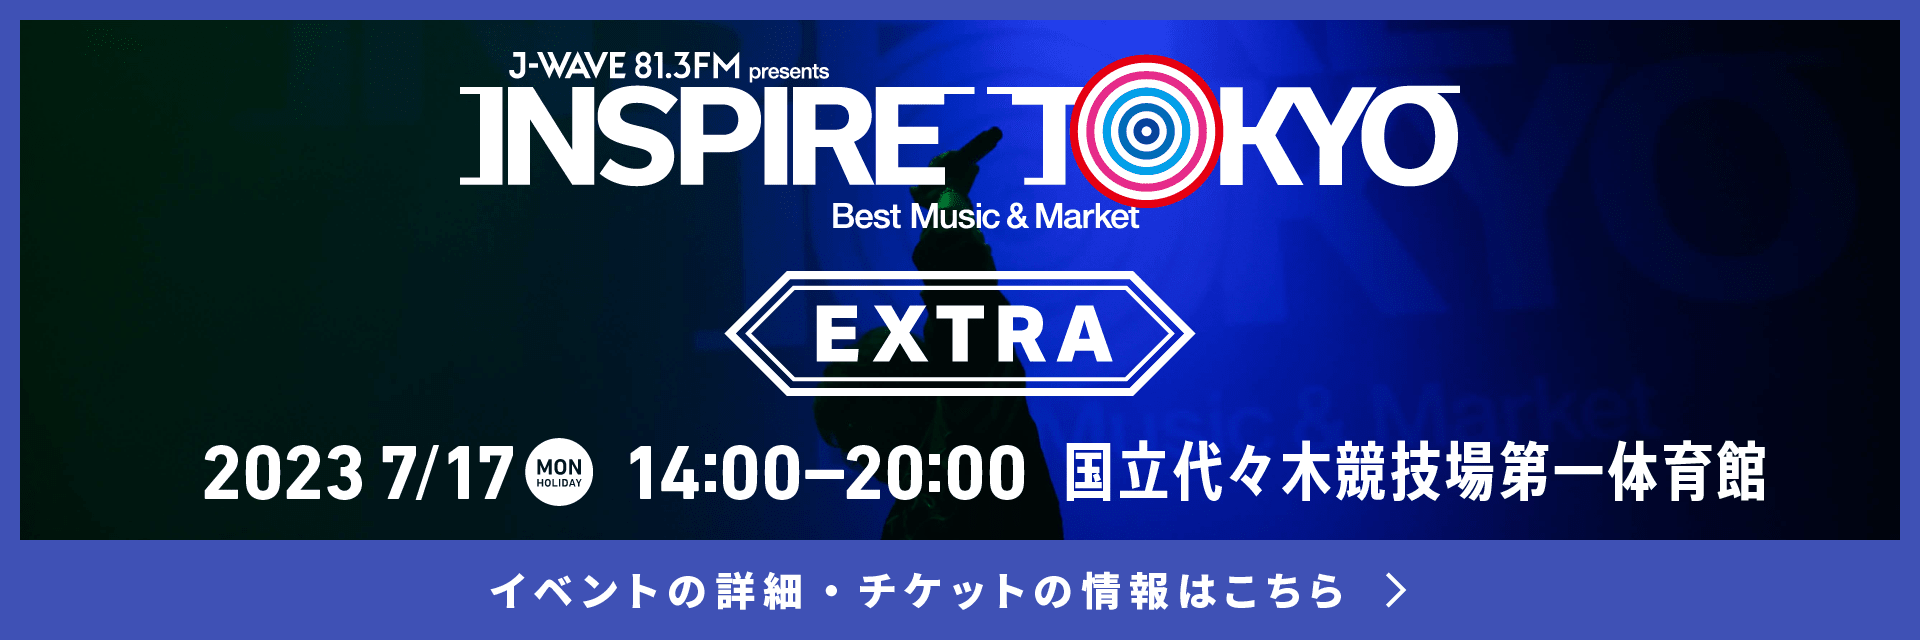 INSPIRE TOKYO EXTRA 7/17 MON/HOLIDAY 国立代々木競技場第一体育館 イベントの詳細・チケットの情報はこちら